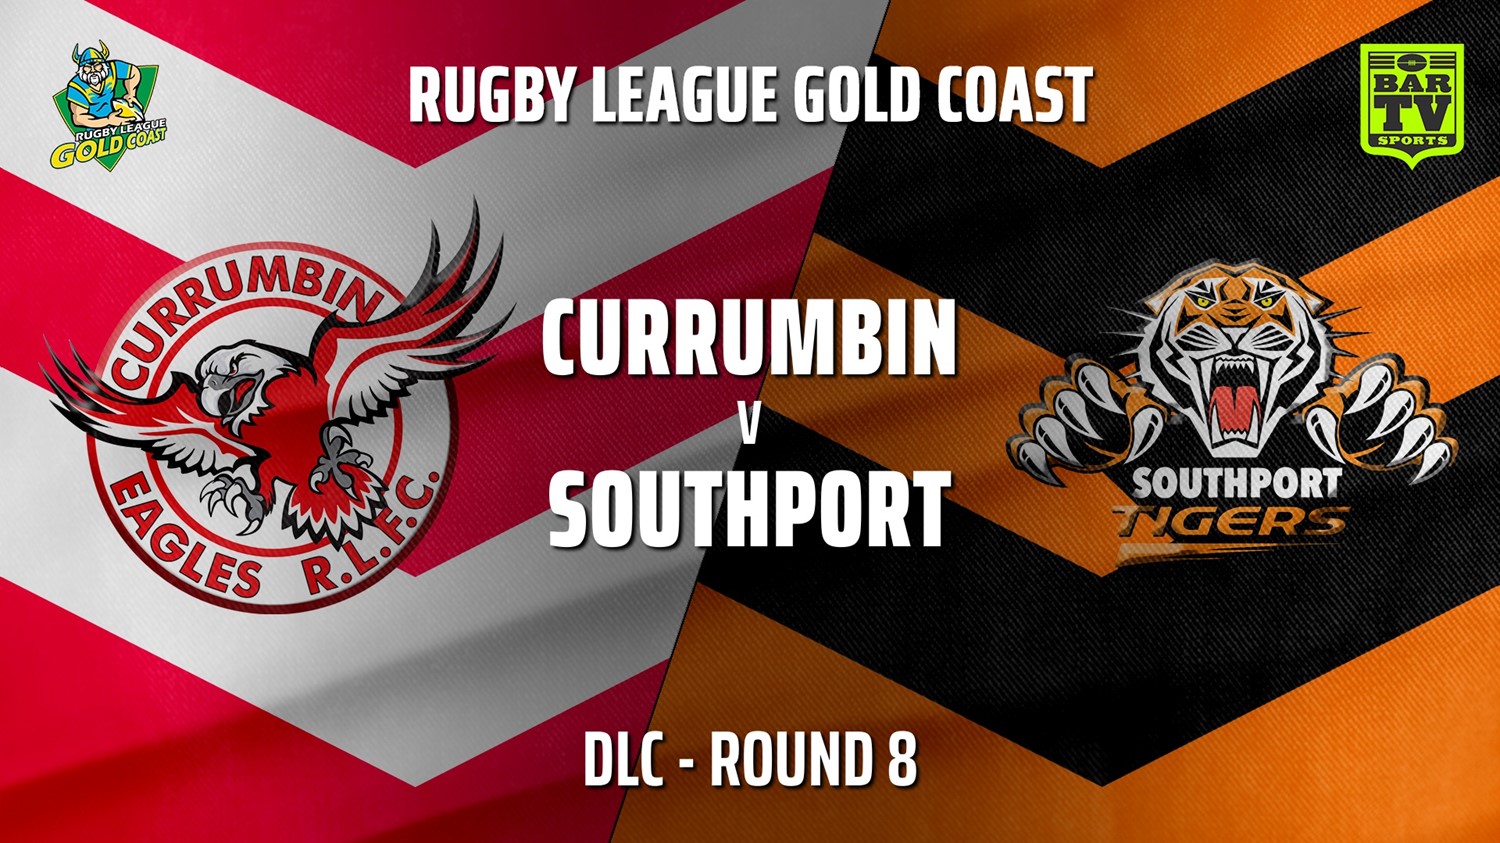 210725-Gold Coast Round 8 - DLC - Currumbin Eagles v Southport Tigers Slate Image